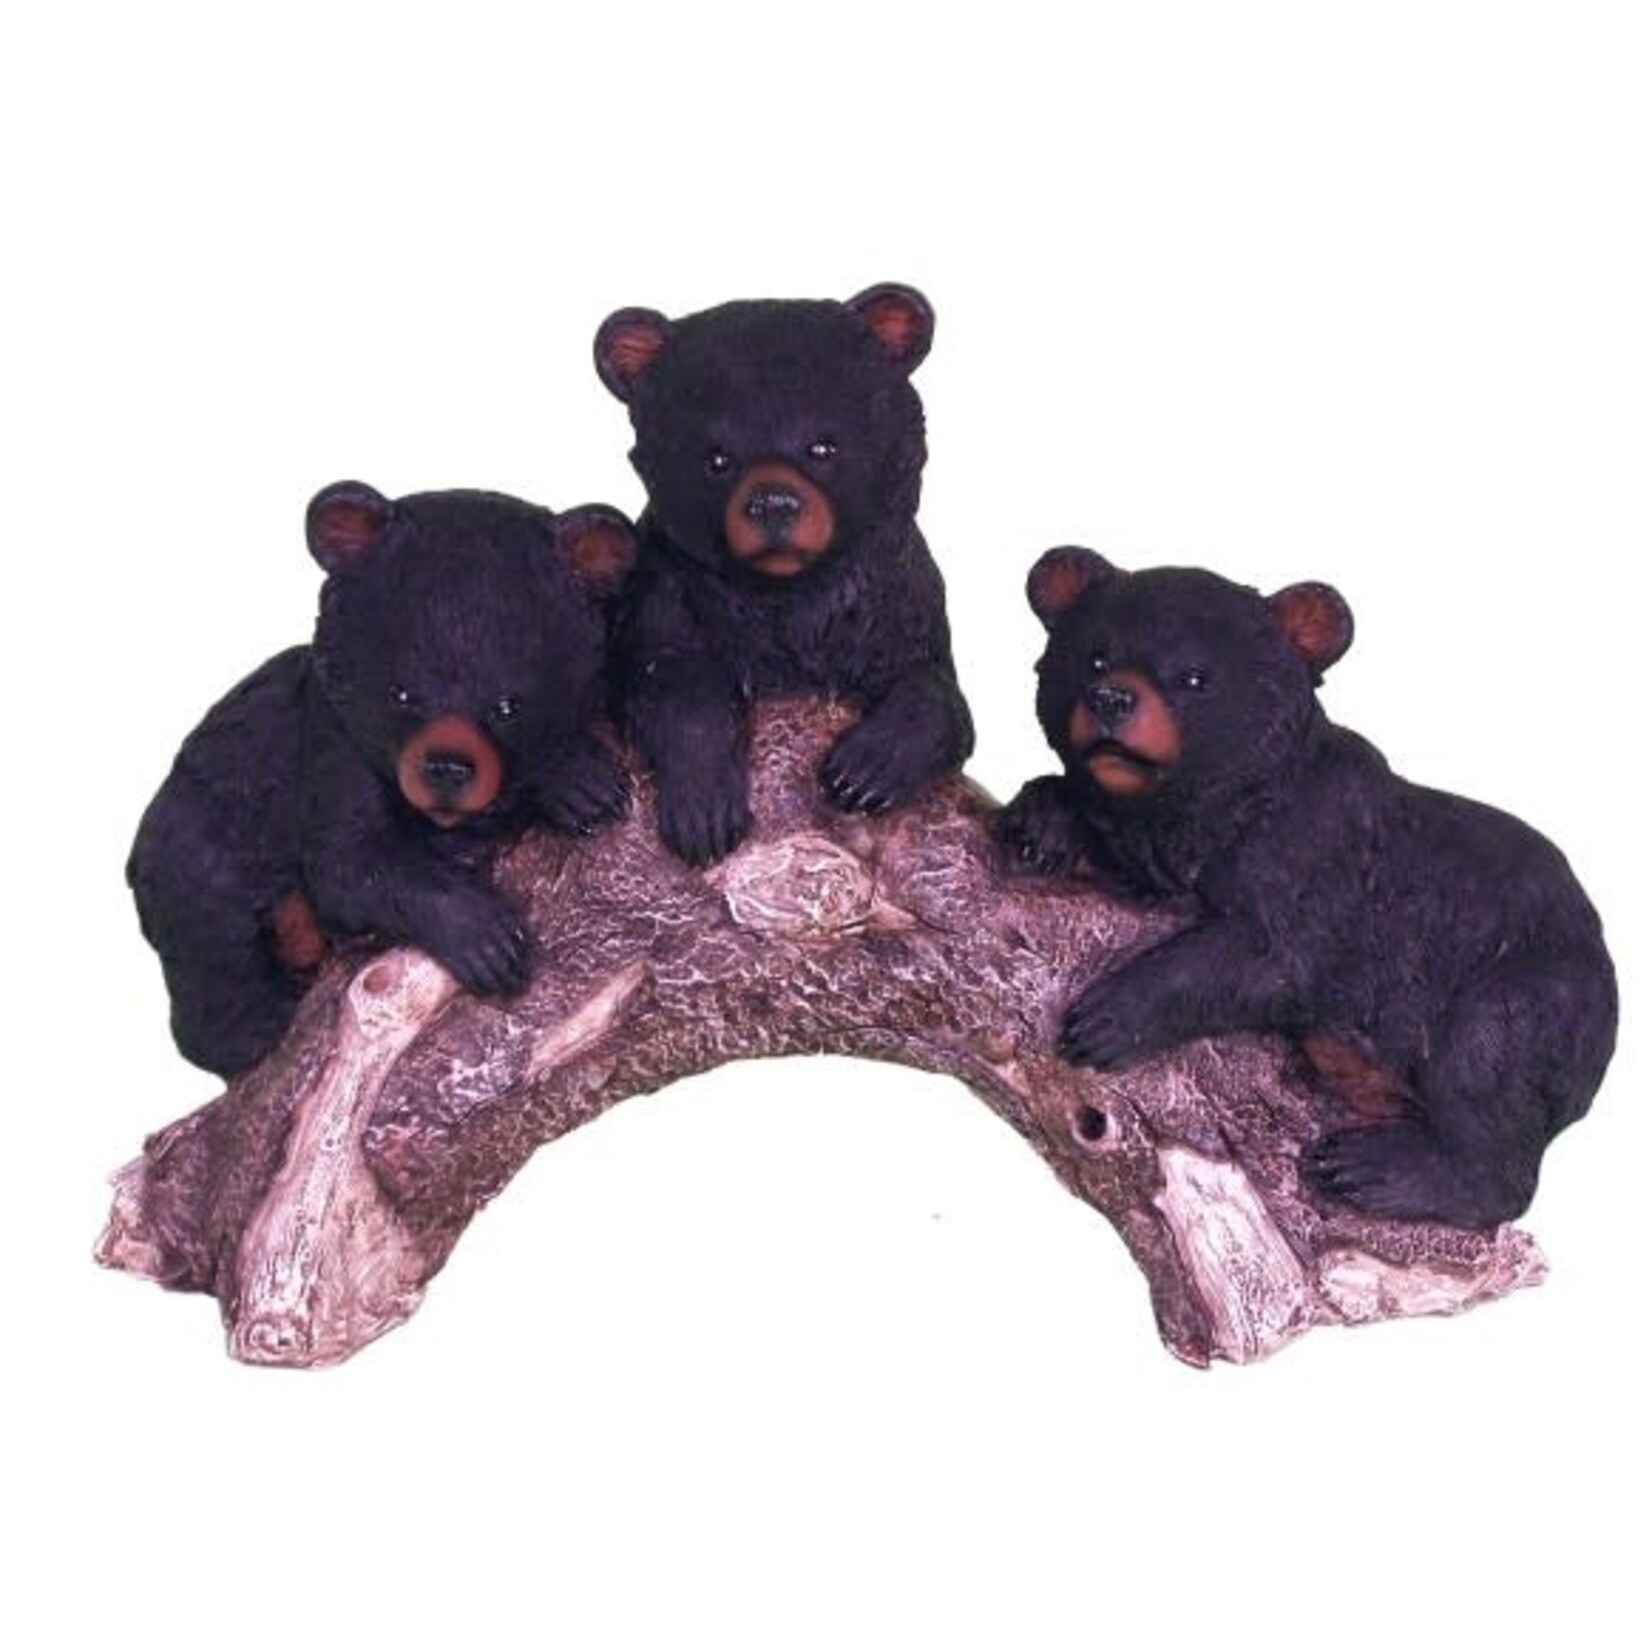 3 bears on a log